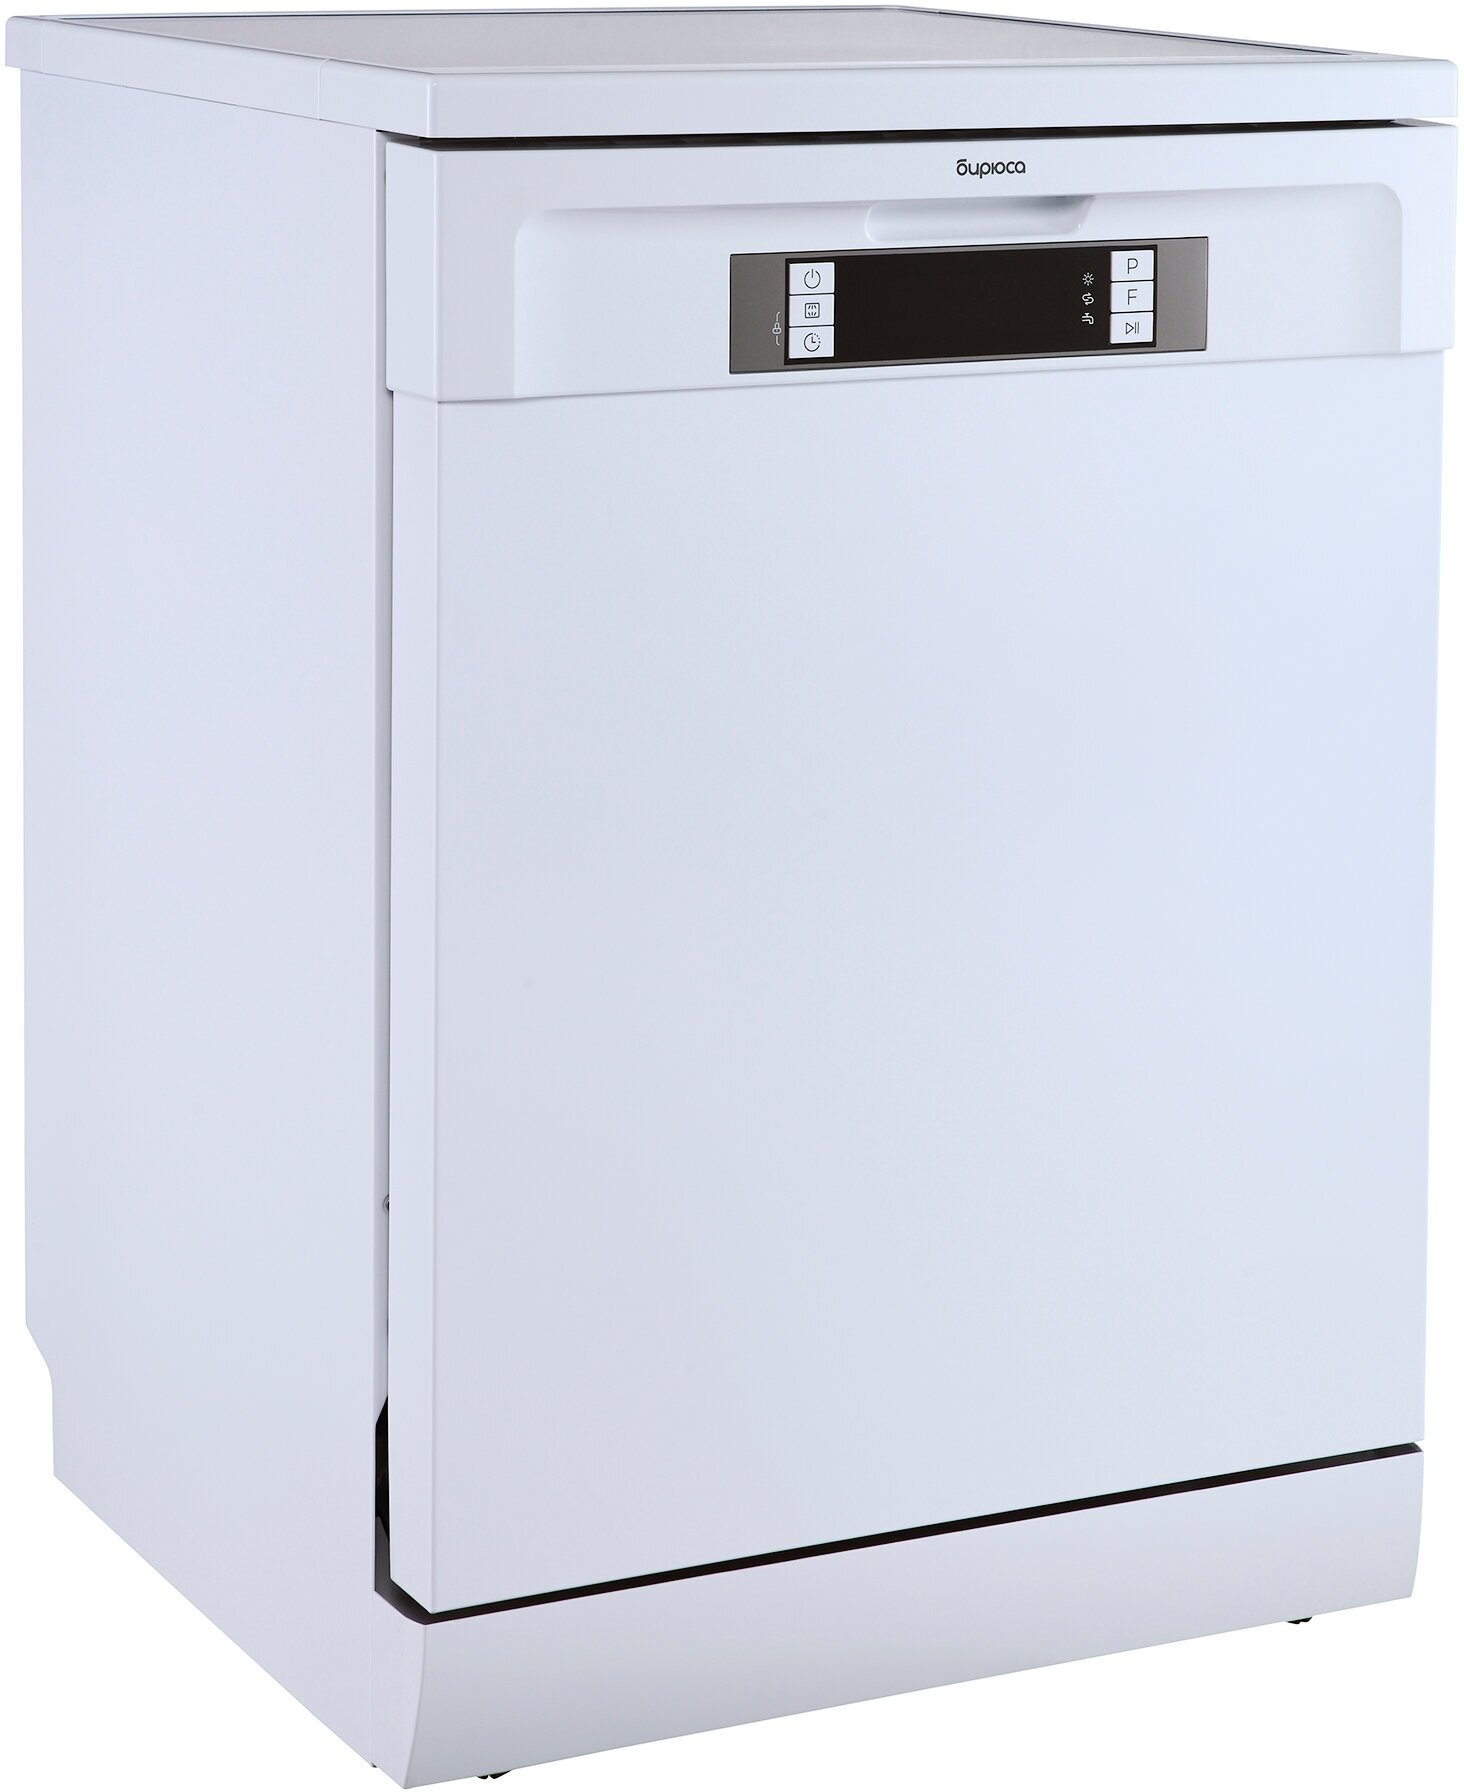 Посудомоечная машина 60см БИРЮСА DWF-614/6 W белый, 3 корз. - фотография № 4